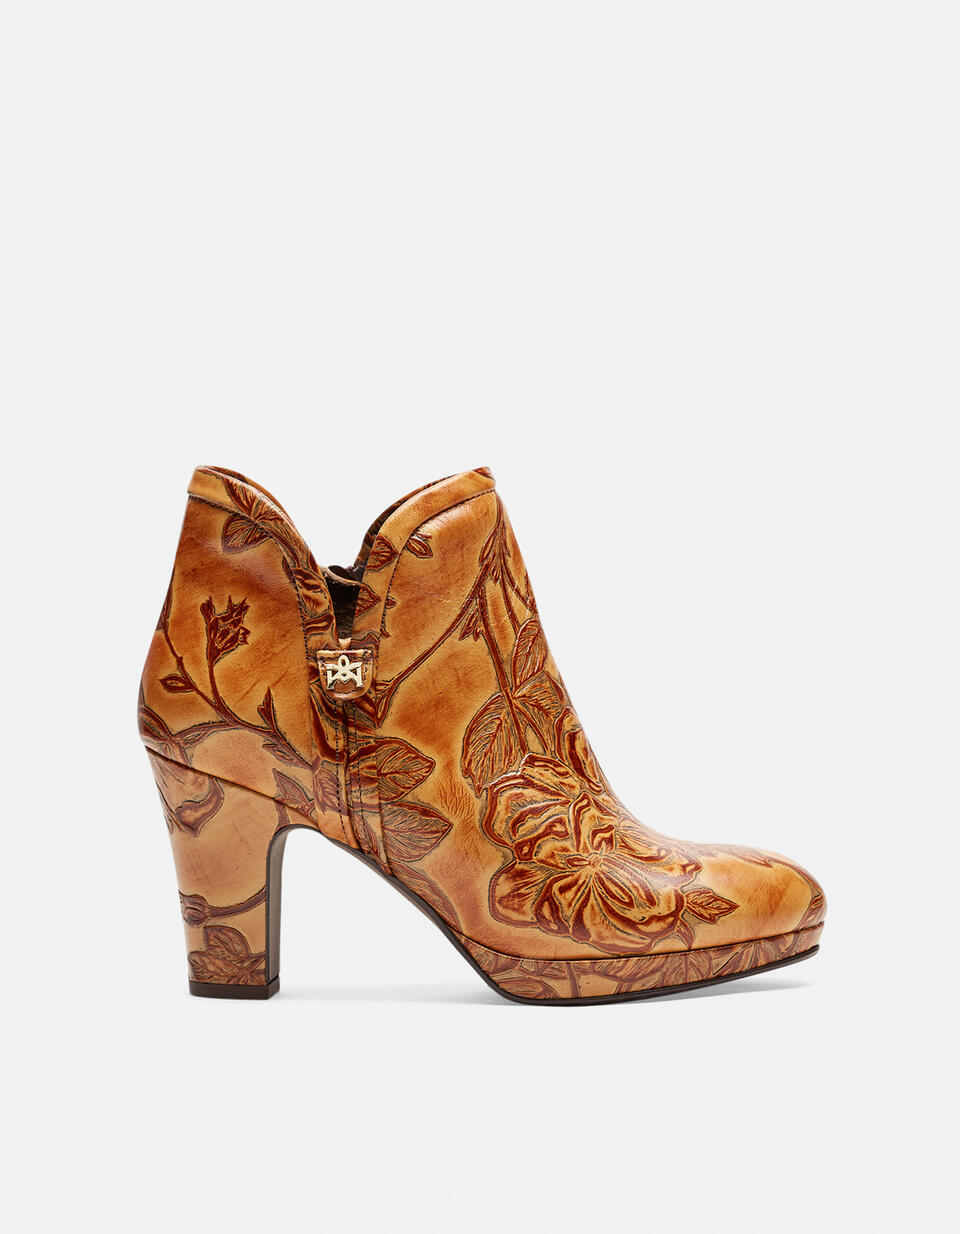 Mimi ankle boots BEIGE  - Women Shoes - Shoes - Cuoieria Fiorentina